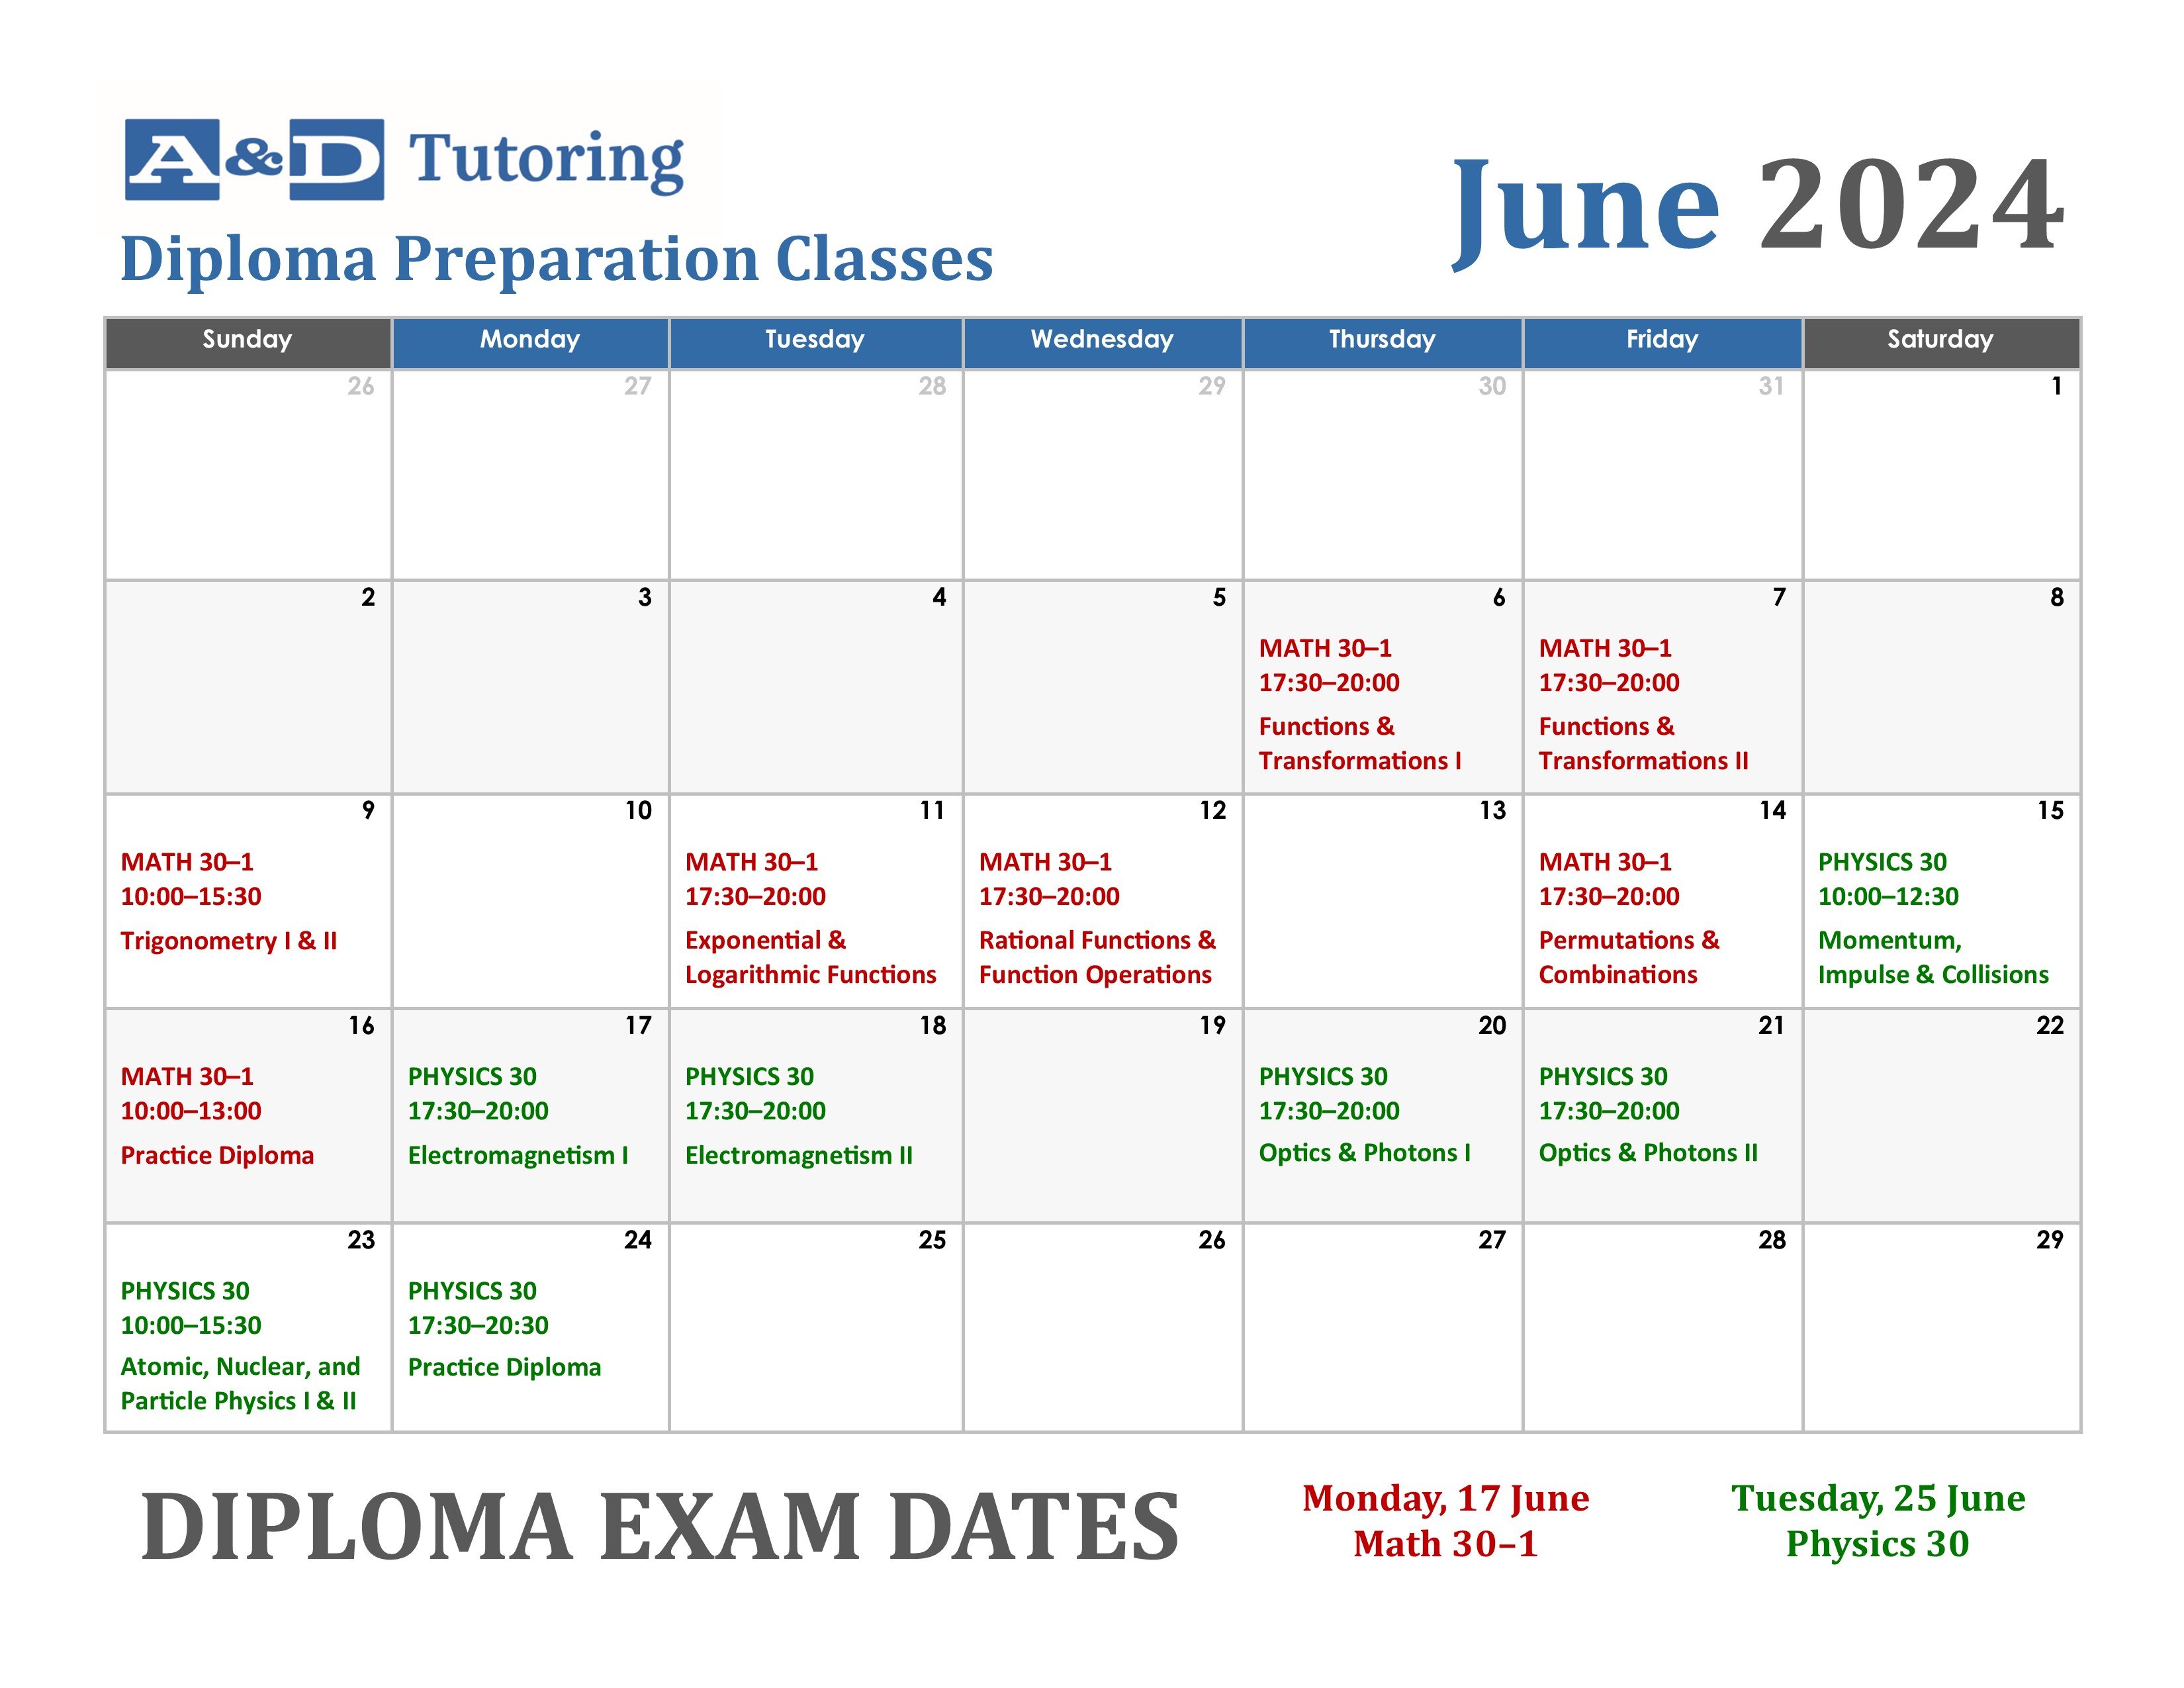 Diploma preparation classes calendar.